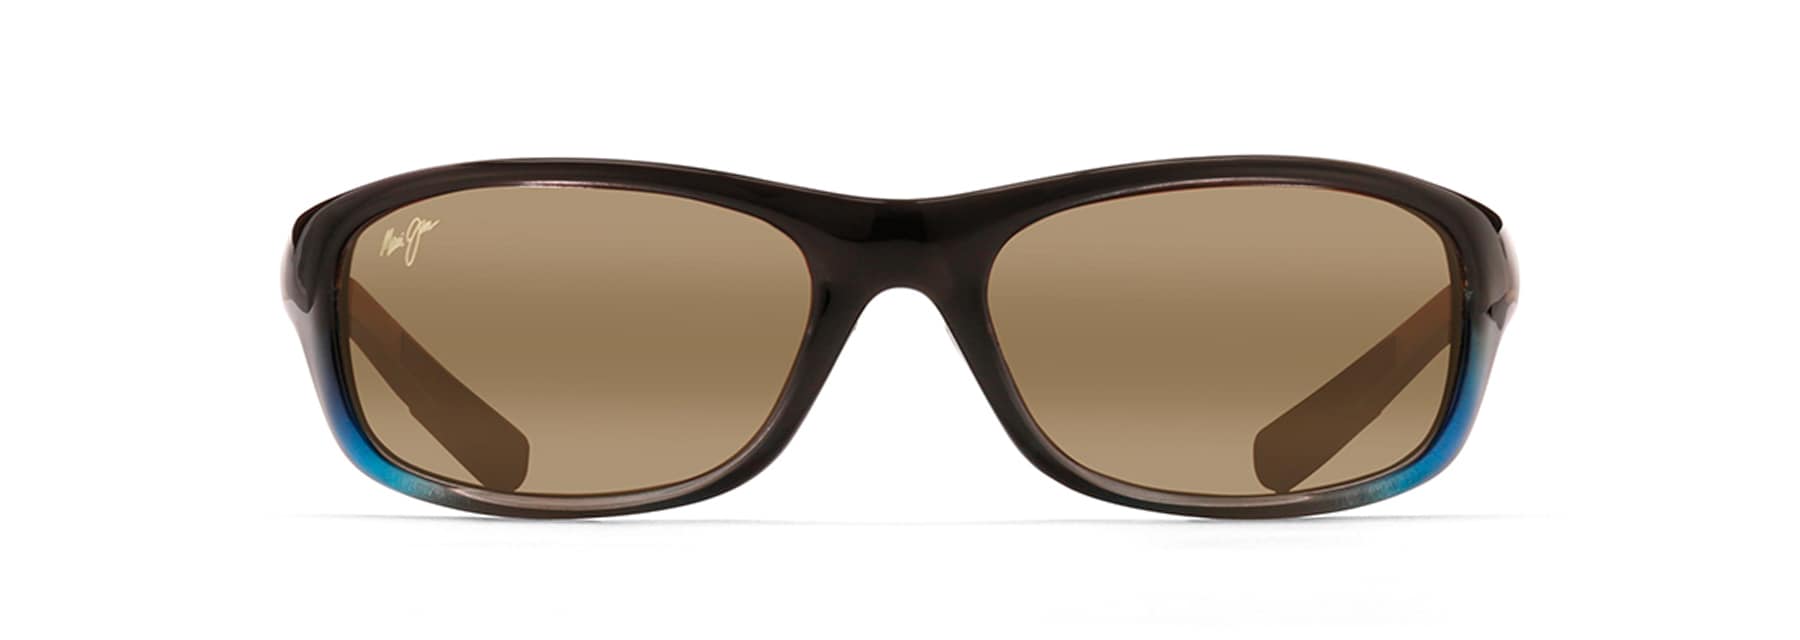 Maui Jim Kipahulu 279 Sunglasses- Mahi Mahi with Polarized Neutral Grey,  Blue Hawaii, HCL Bronze Lenses